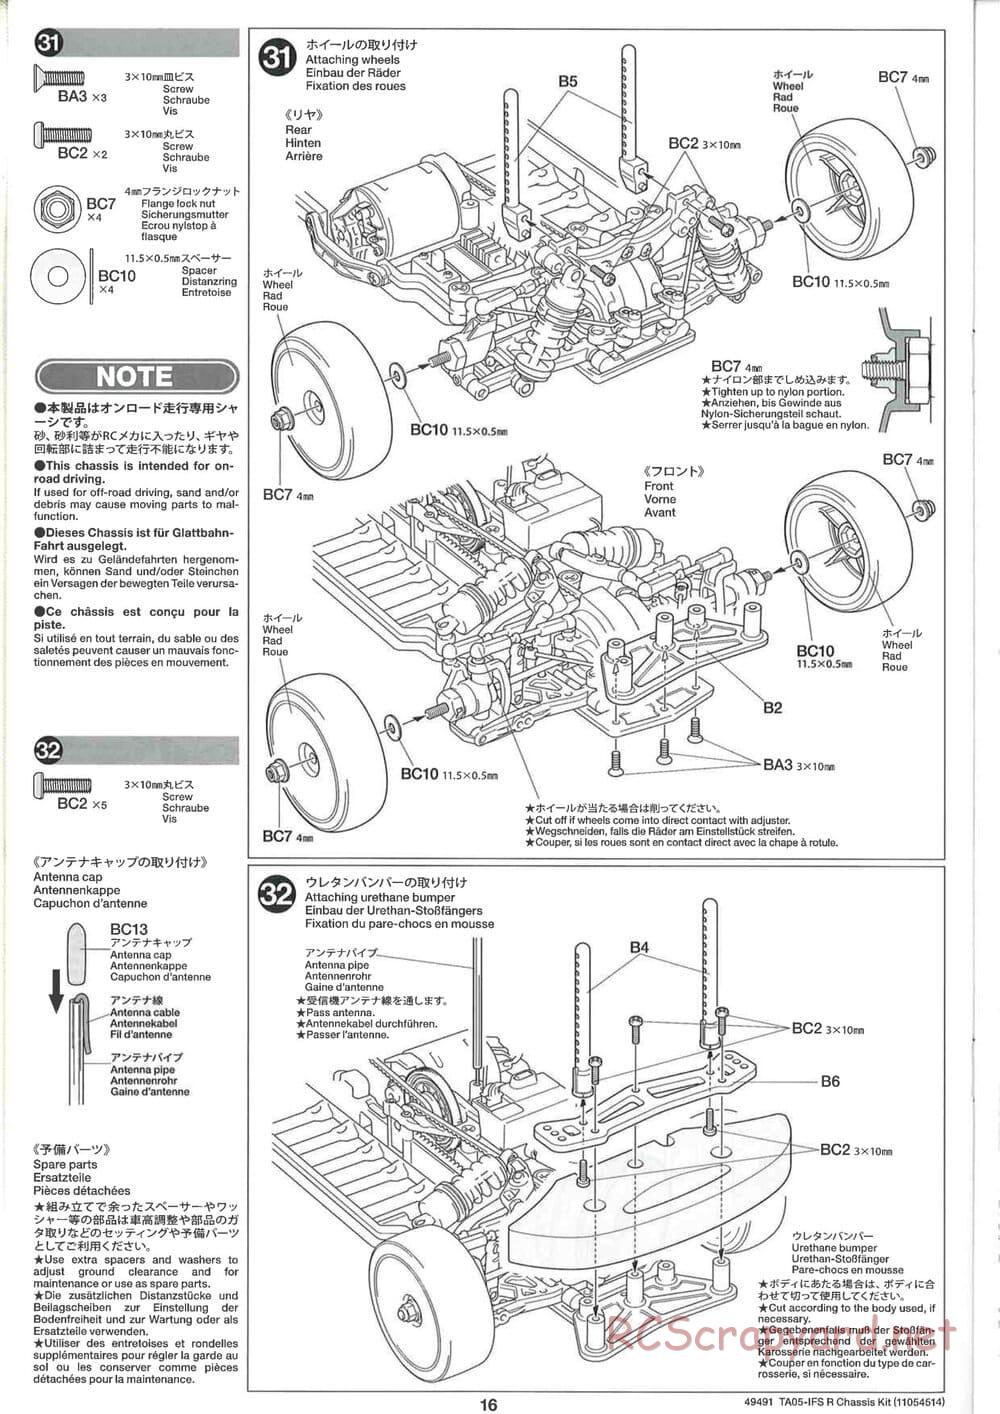 Tamiya - TA05-IFS R Chassis - Manual - Page 16